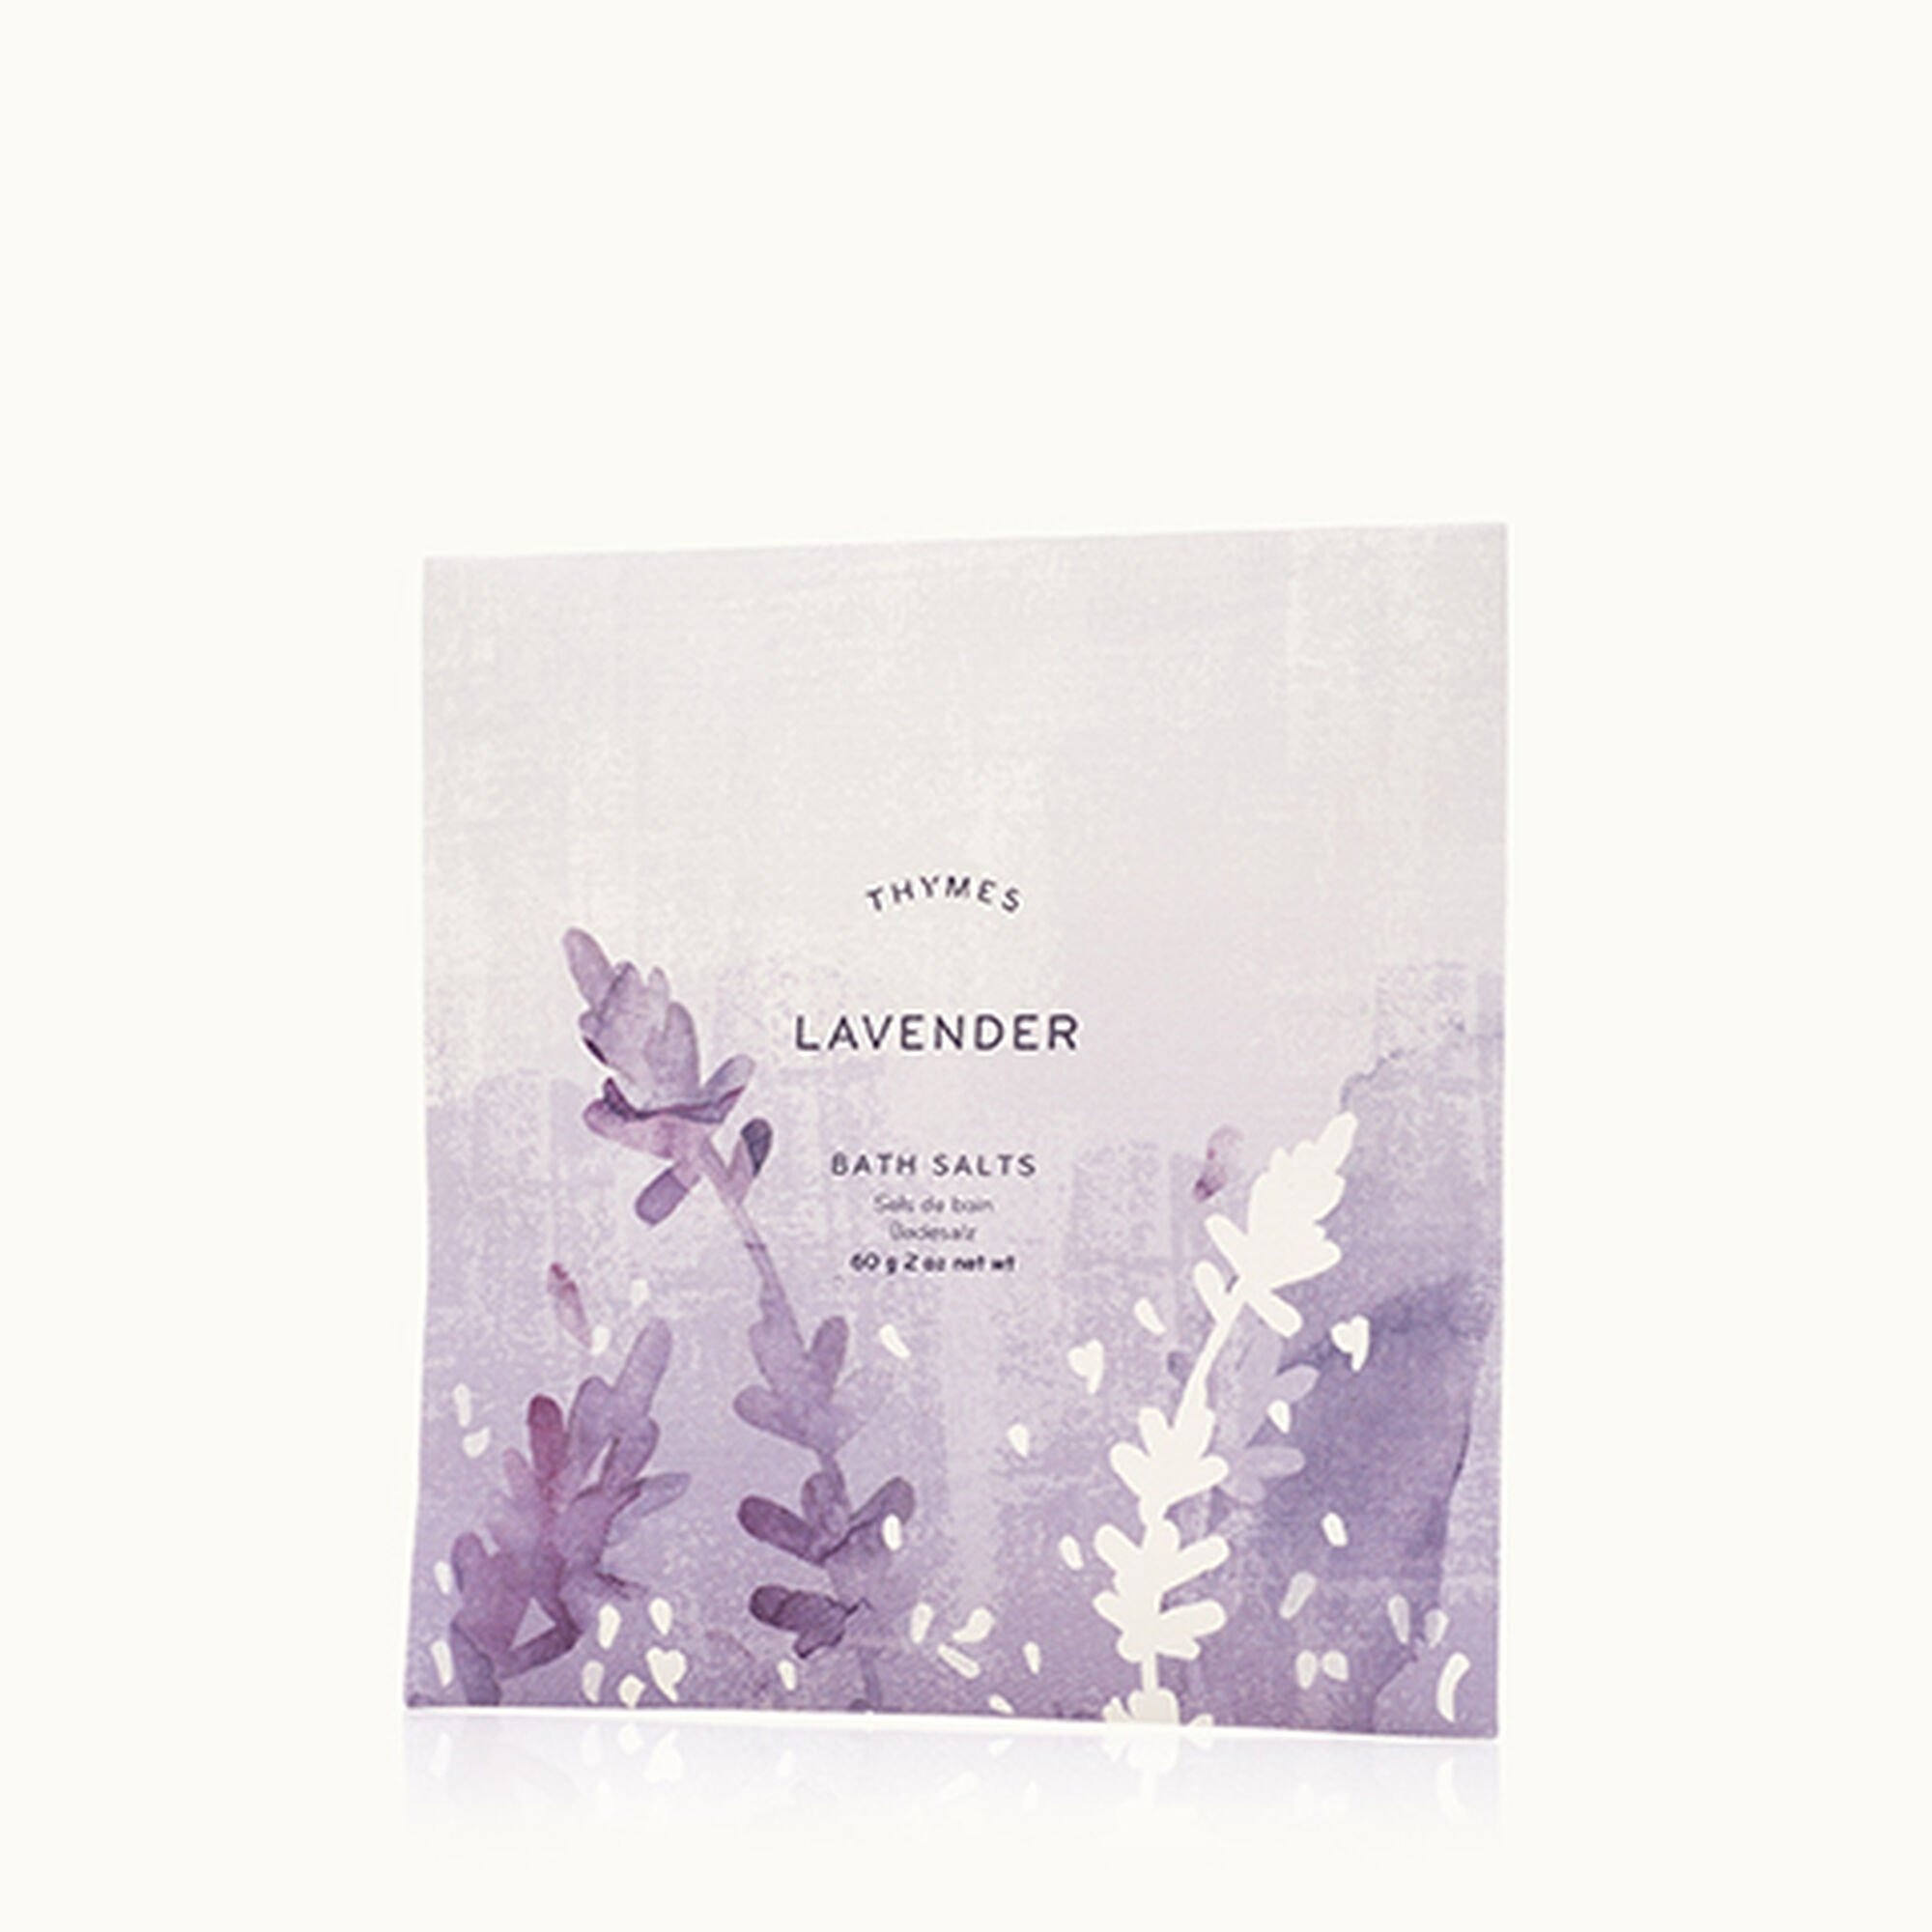 Lavender Bath Salts Envelope-1